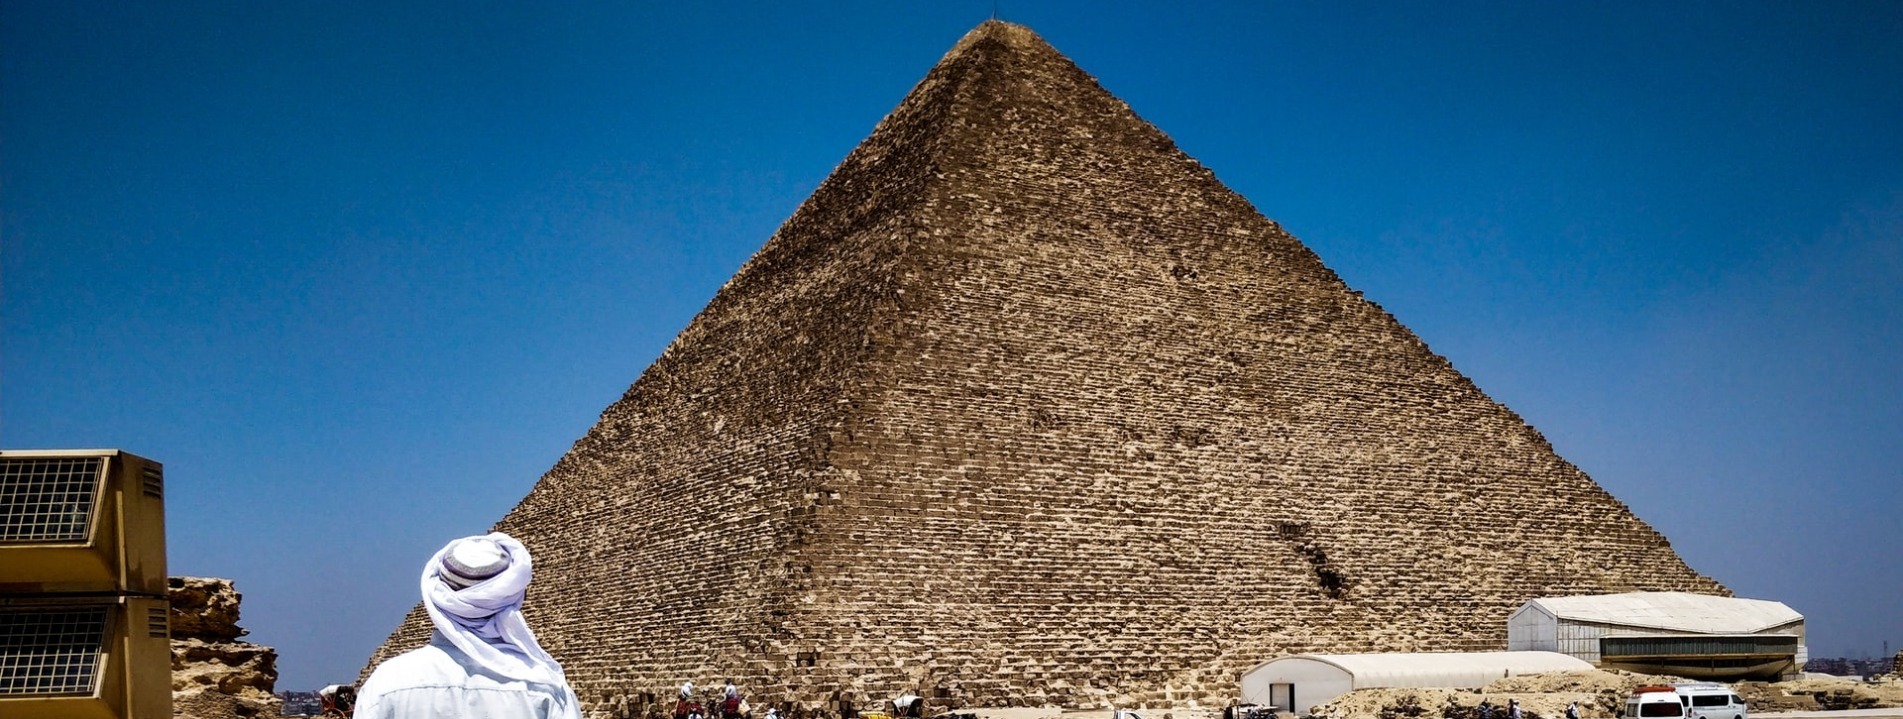 Egypt Group Tours vs Private Egypt Tours: 6 Key Differences